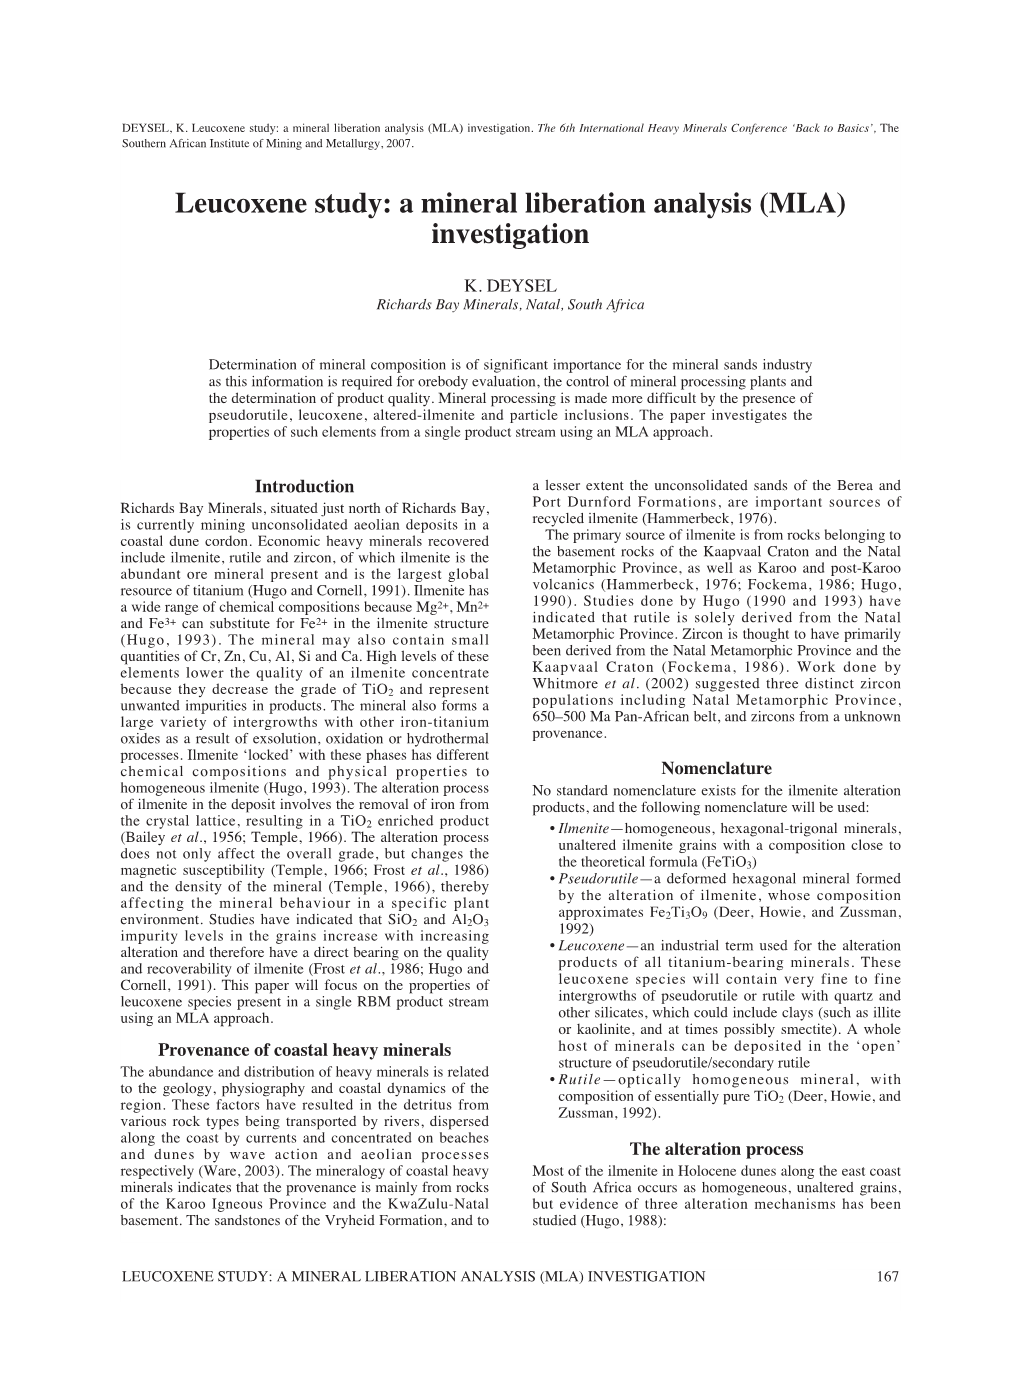 Leucoxene Study: a Mineral Liberation Analysis (MLA) Investigation